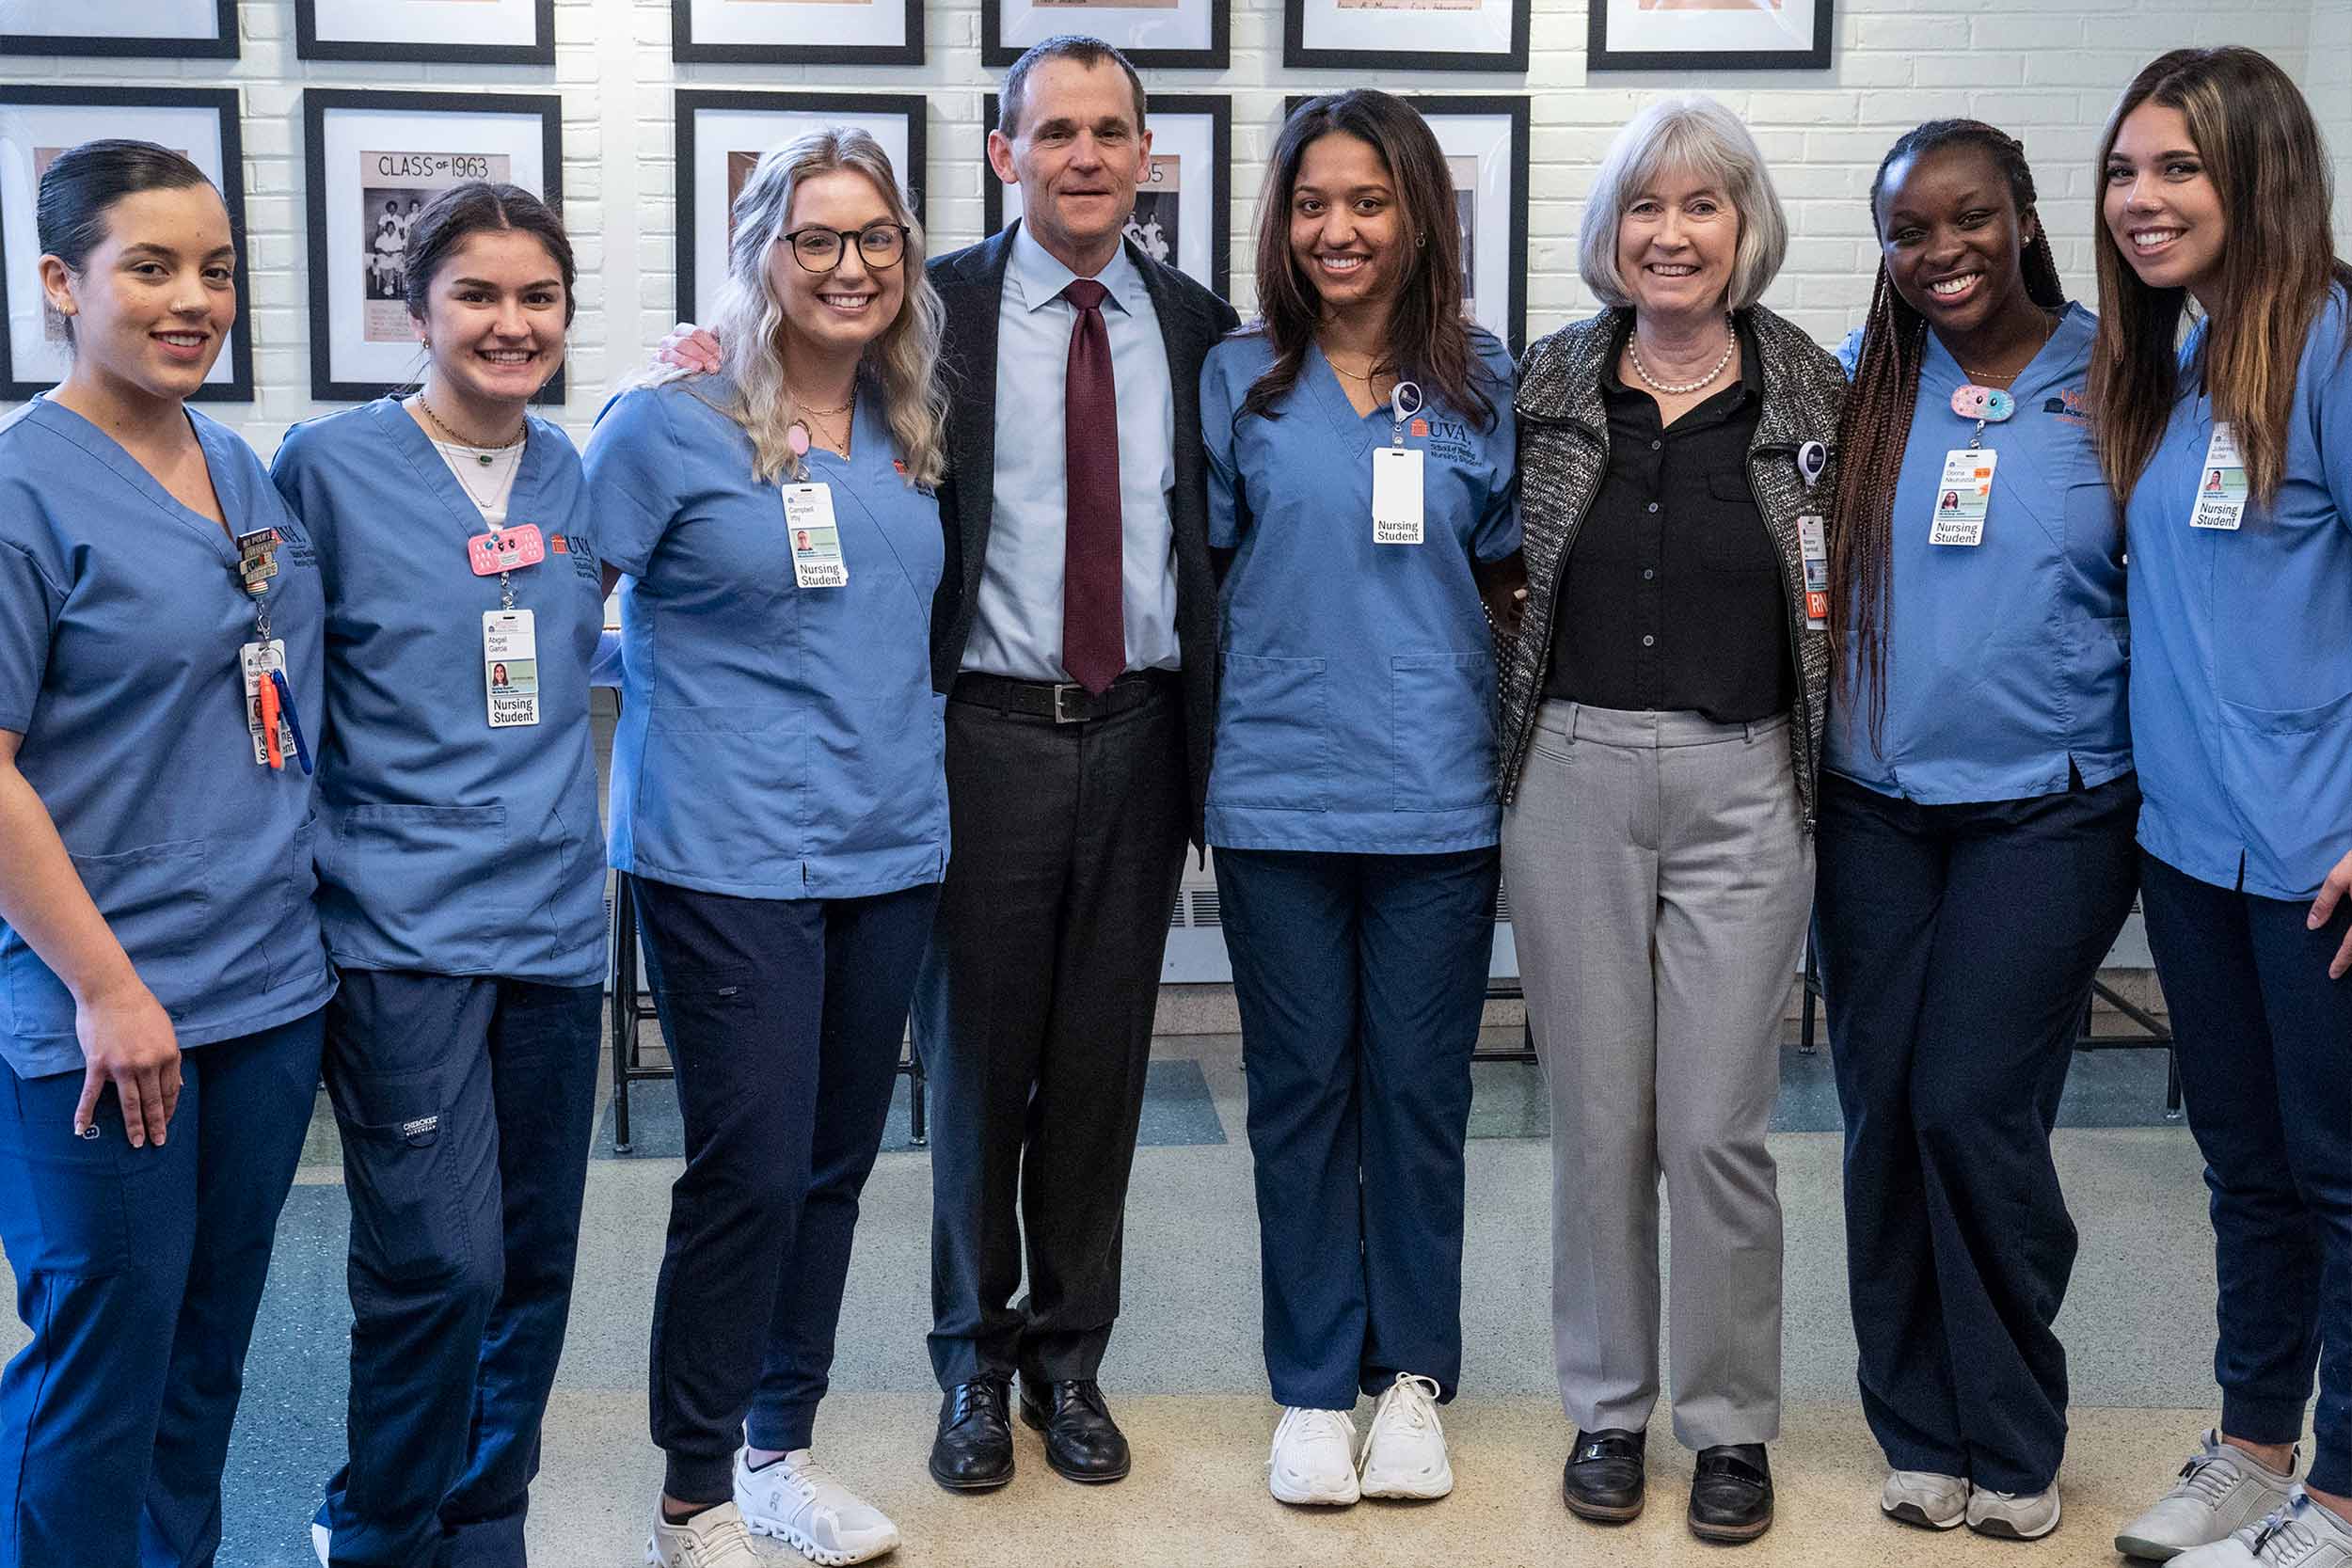 Group photo of President Ryan, Dean Baernholdt, and the nursing students presenting